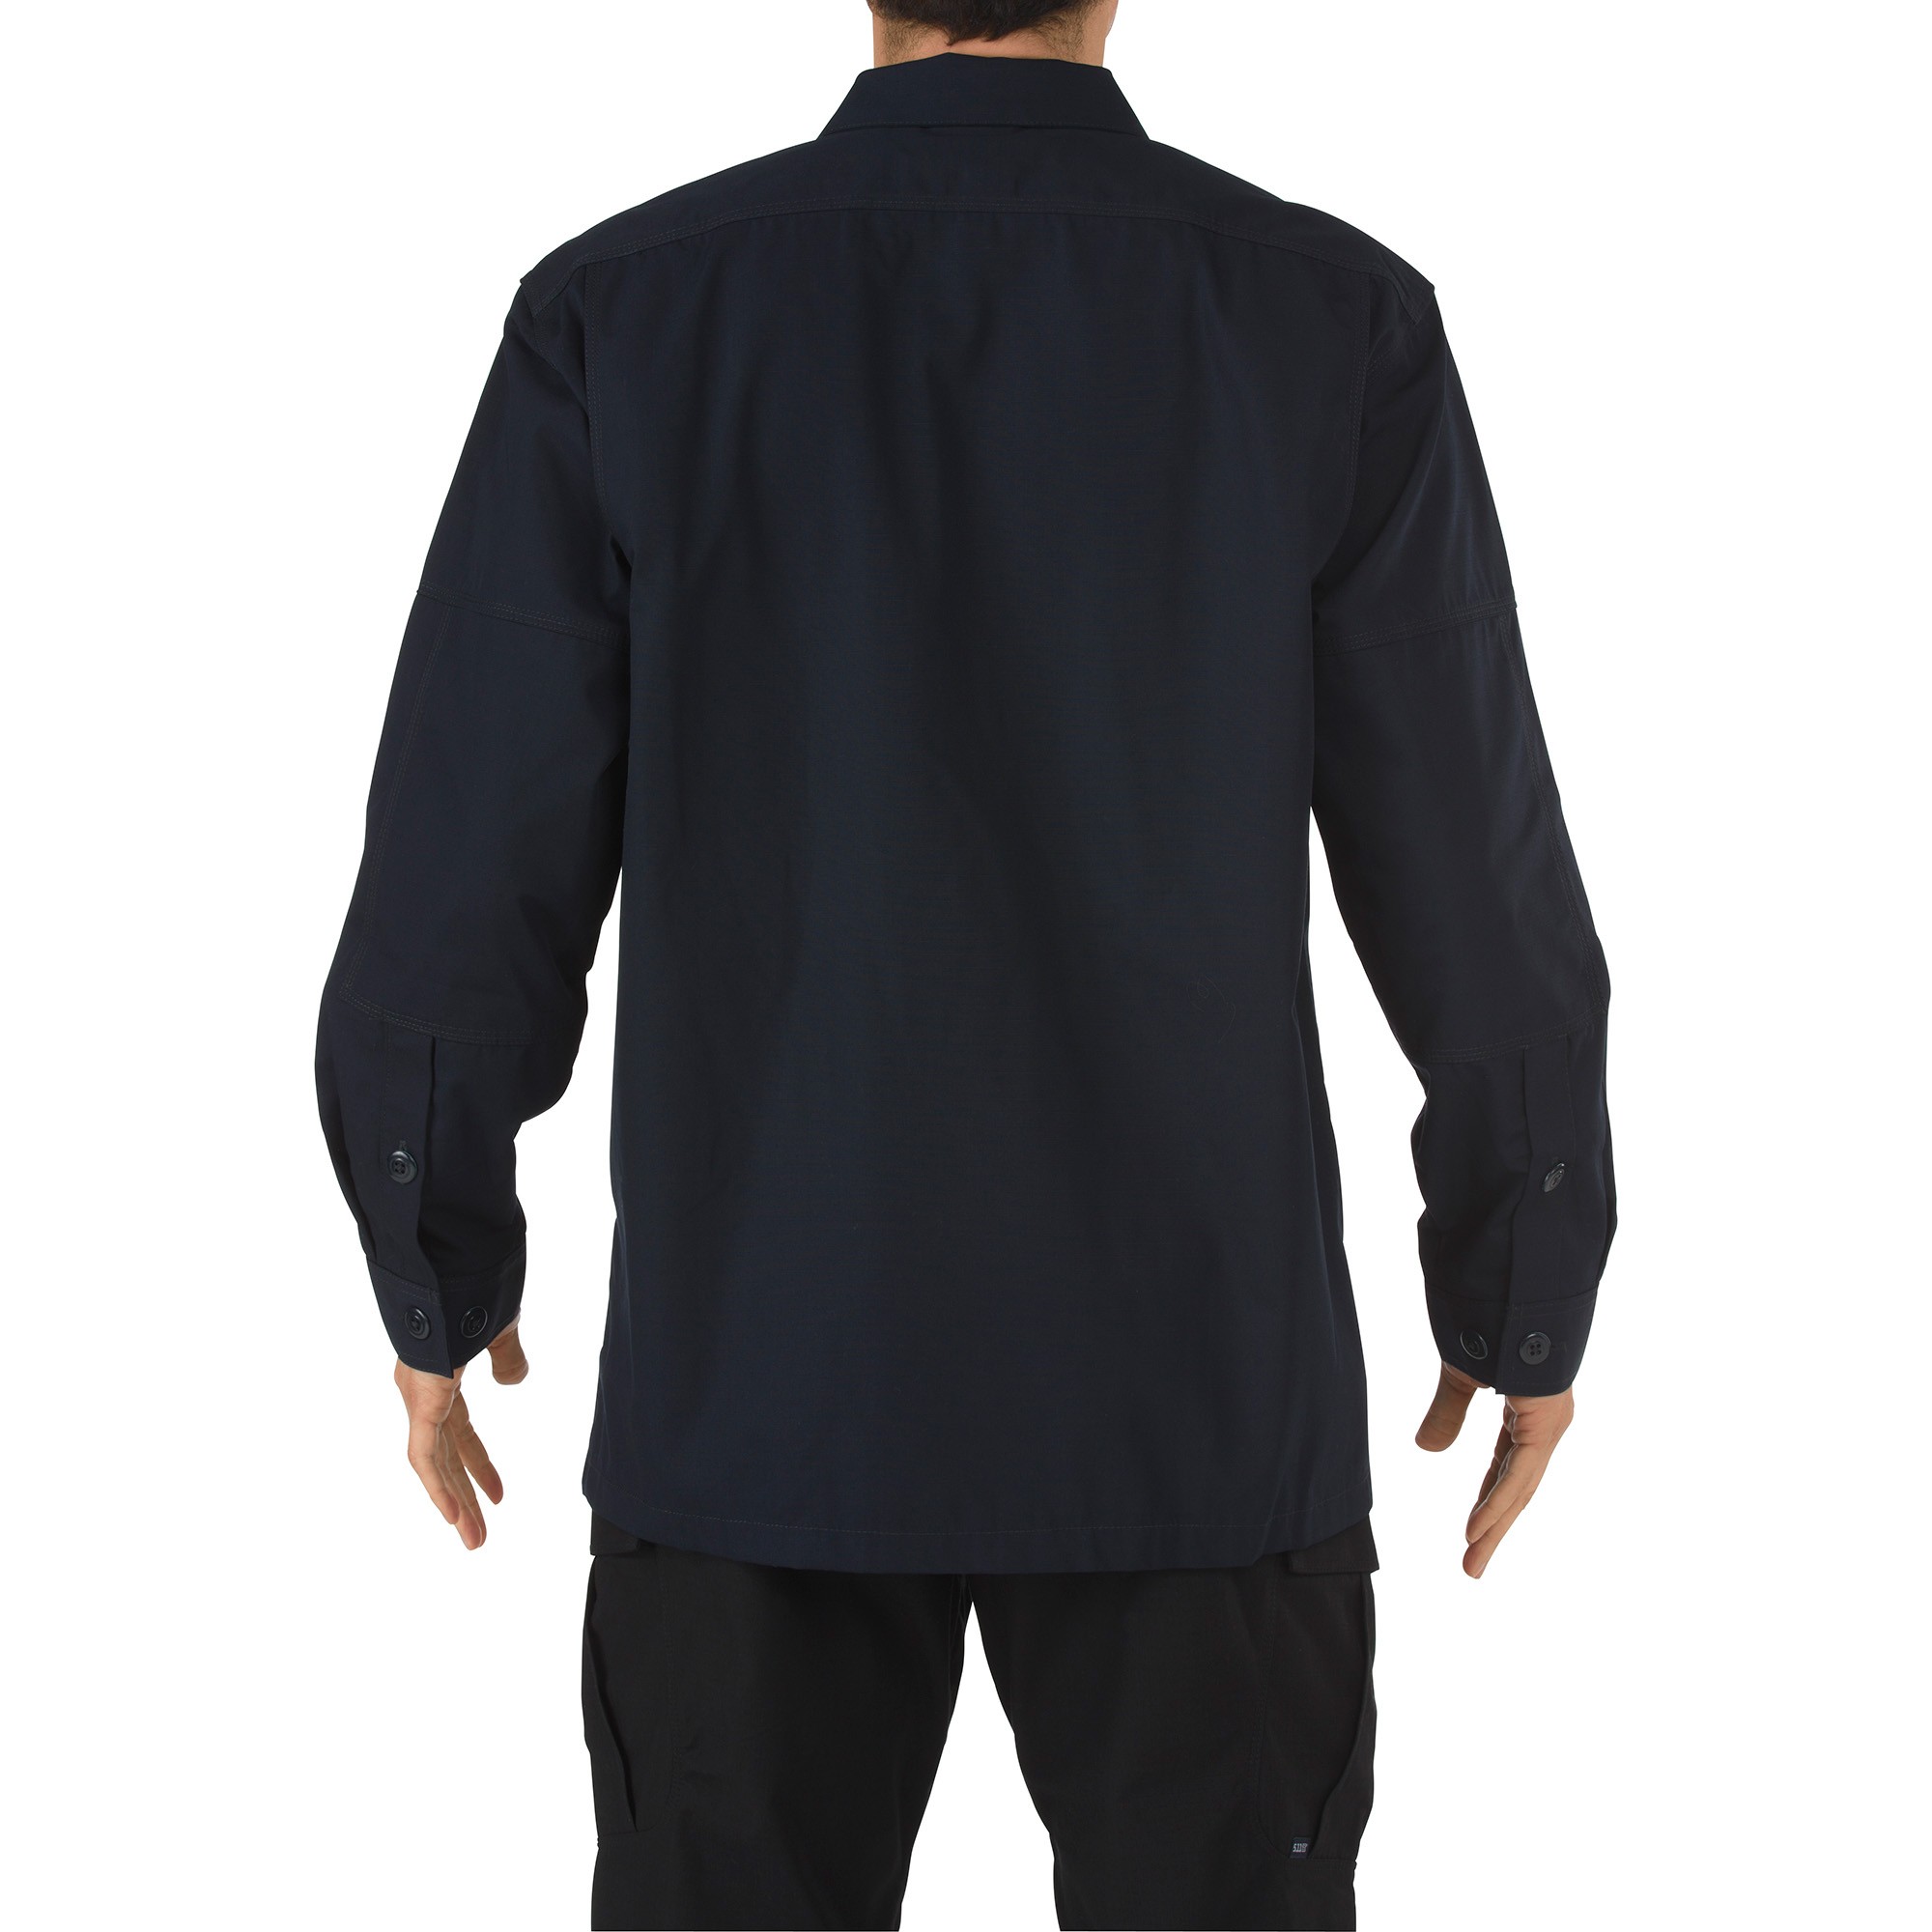 5.11 Ripstop TDU Shirt – Long Sleeve